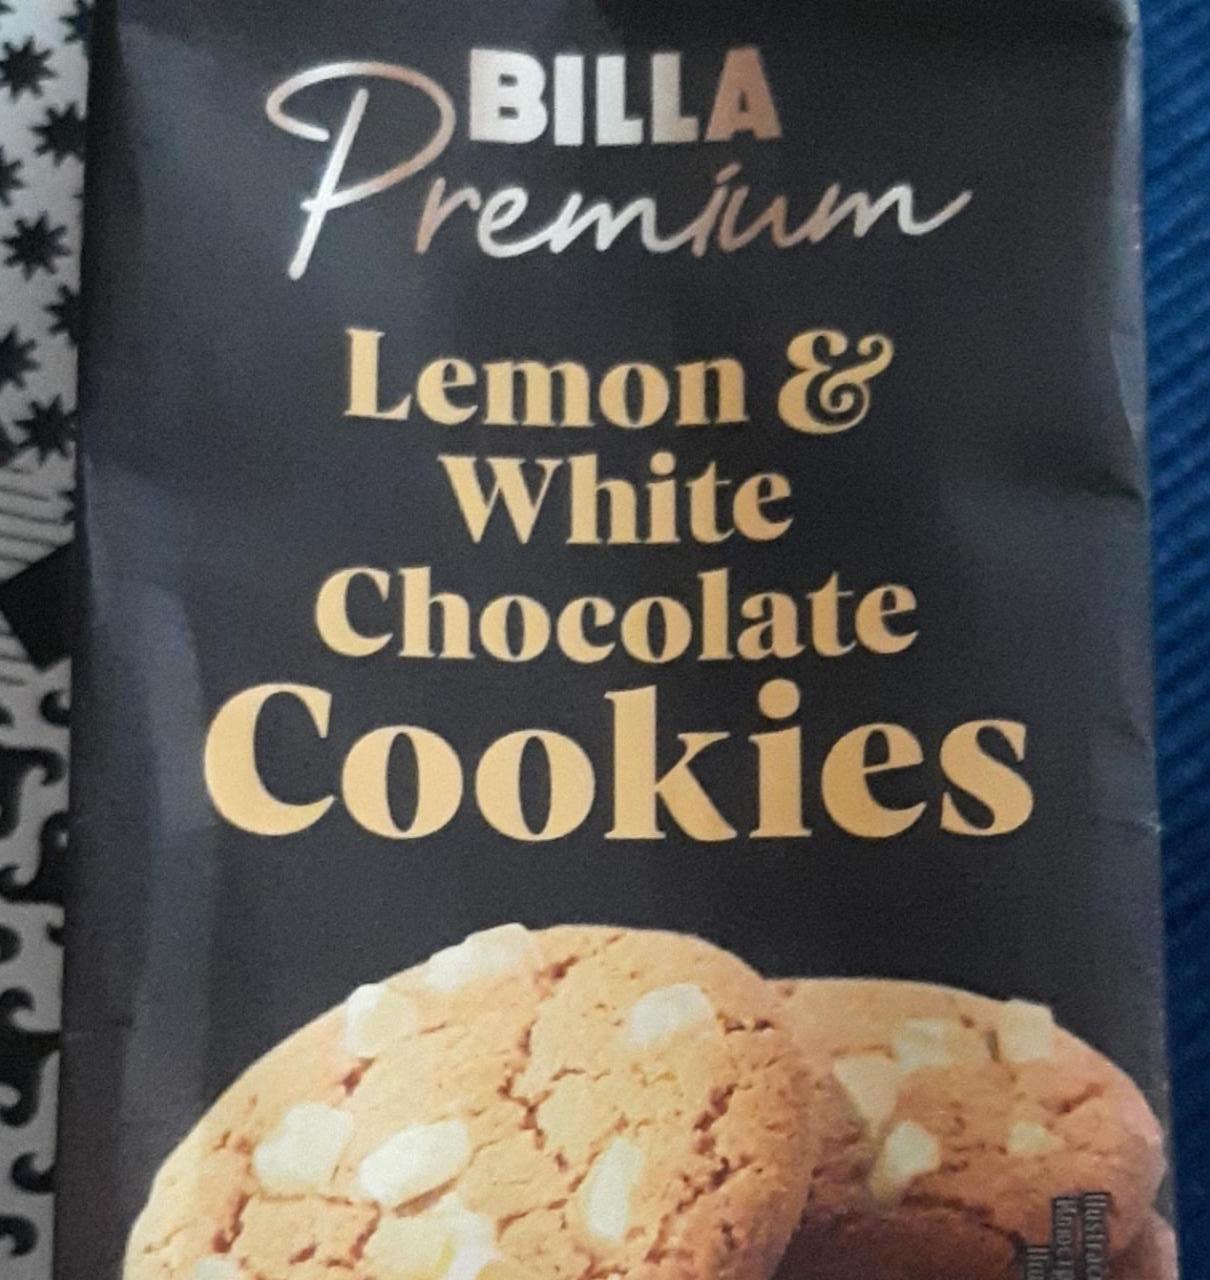 Képek - Lemon & white chocolate cookies Billa